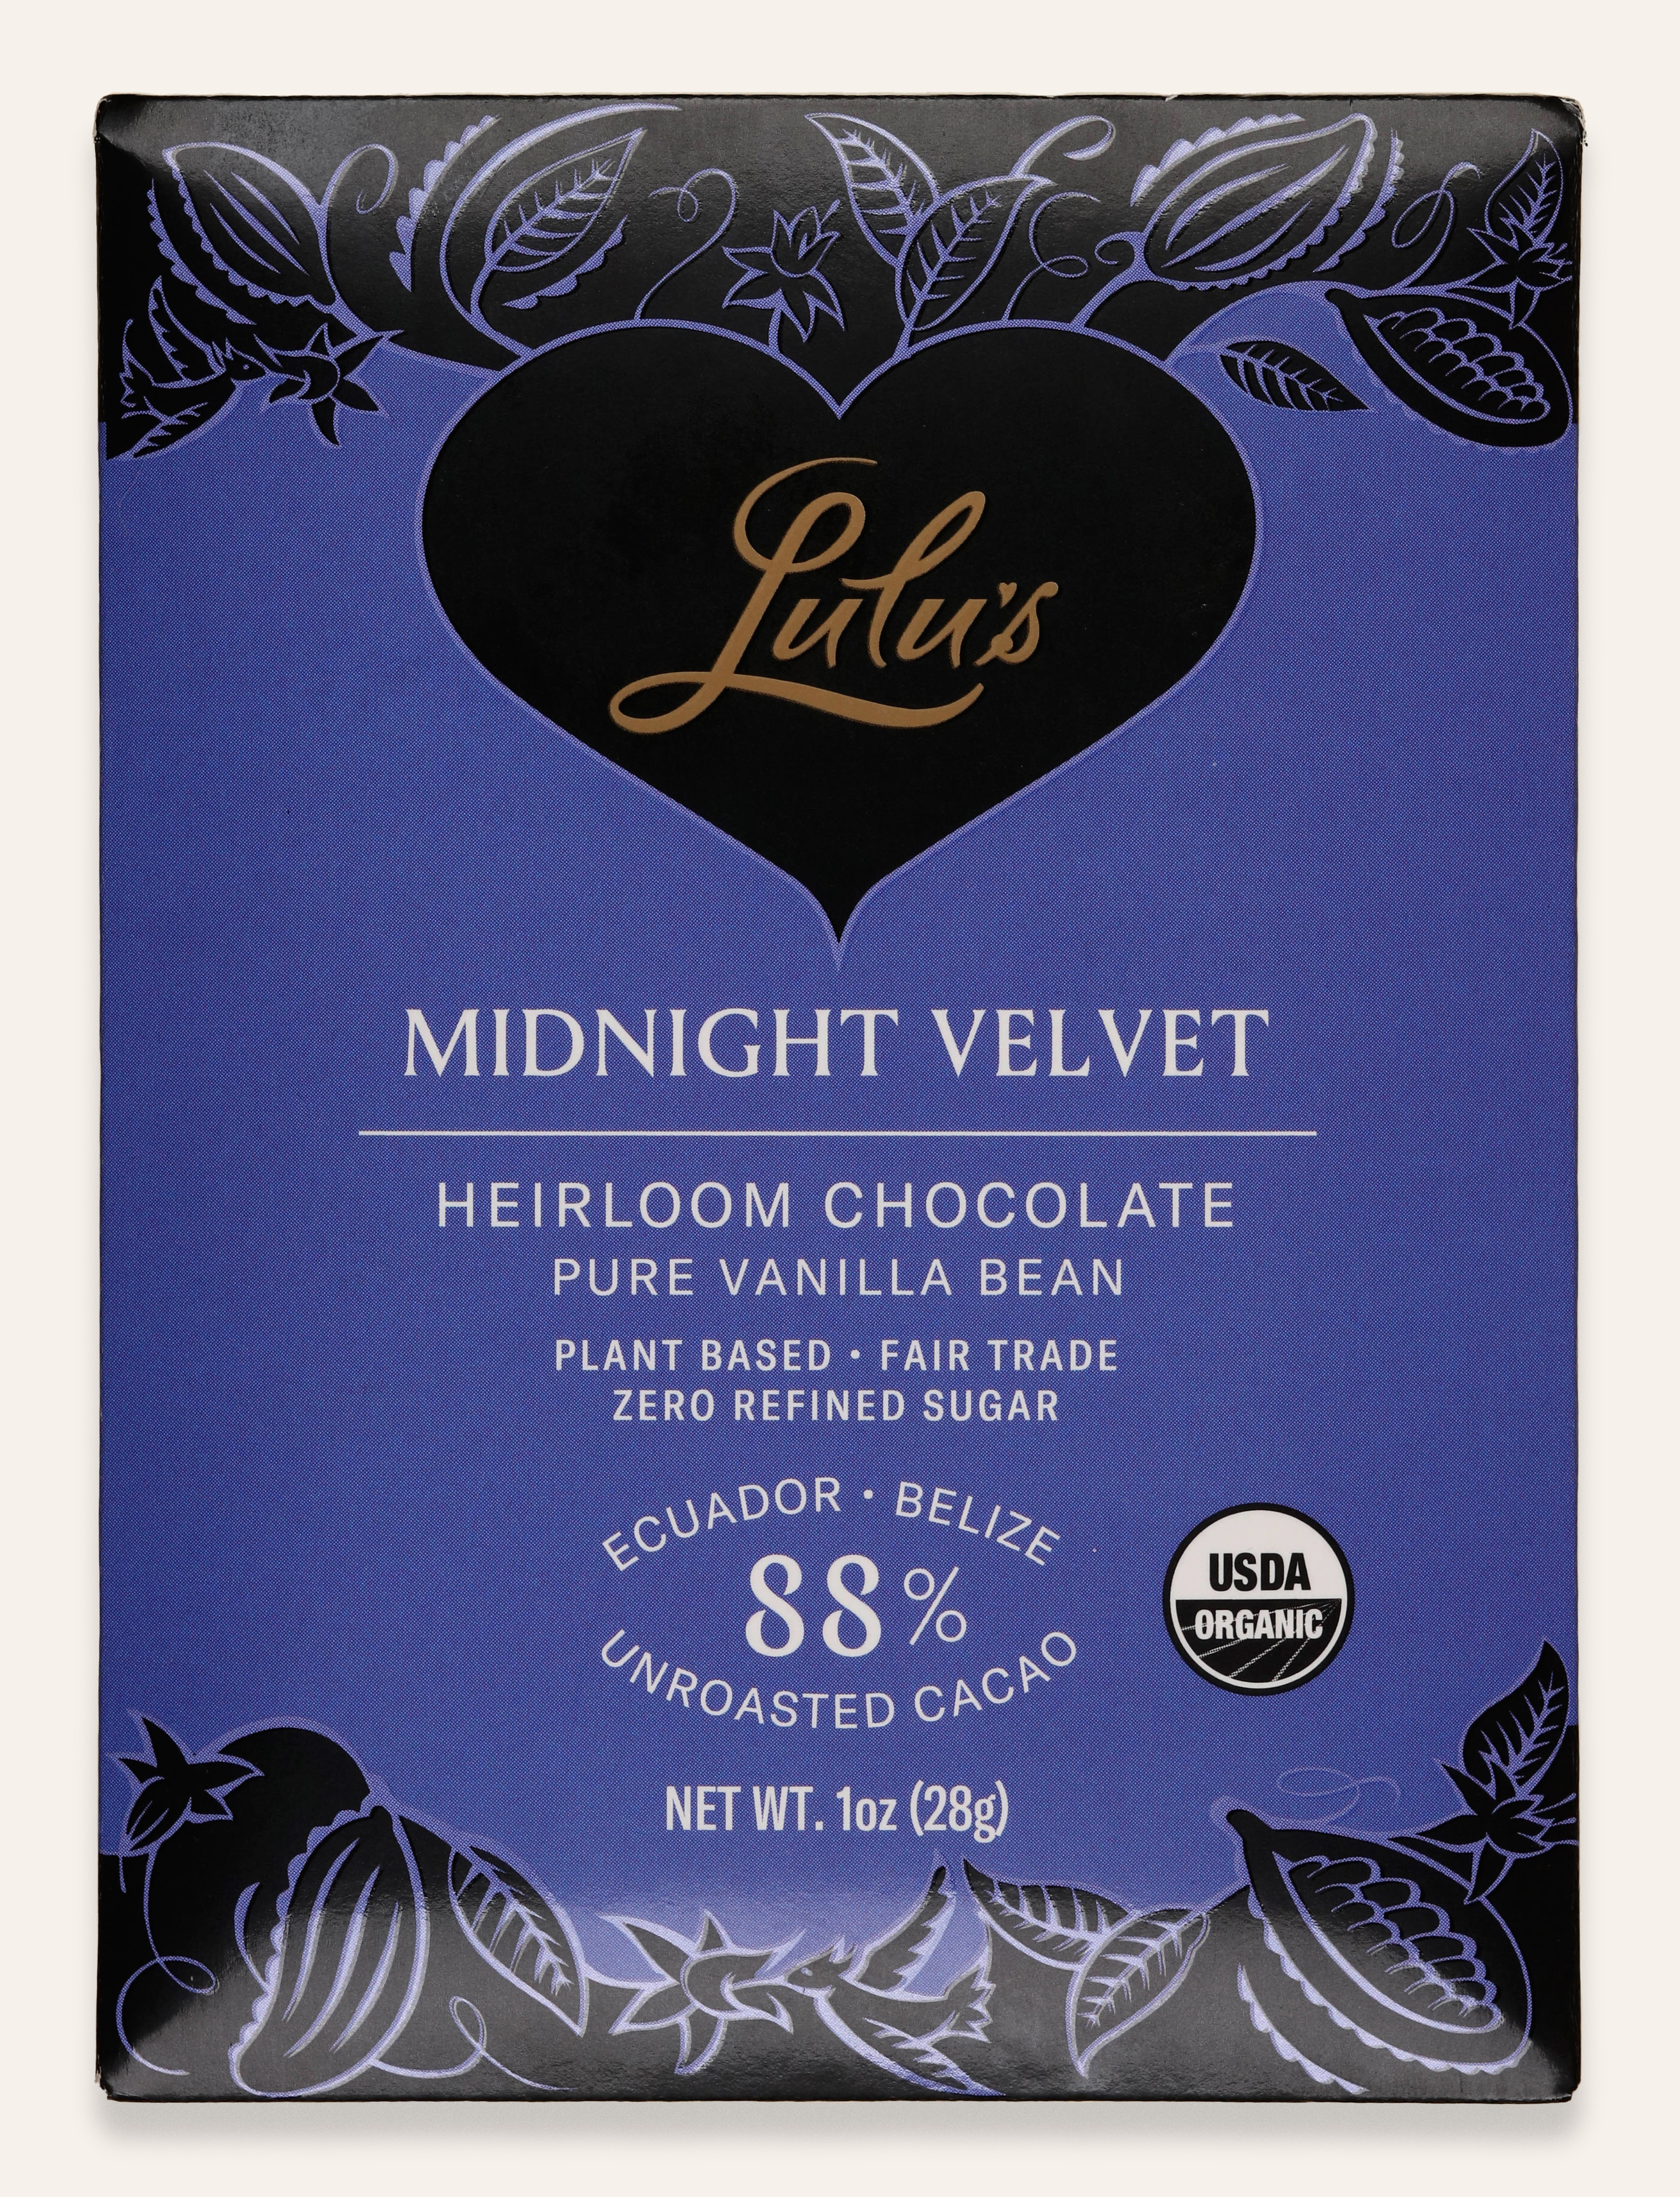 Midnight Velvet - The Chocolate Bar Project